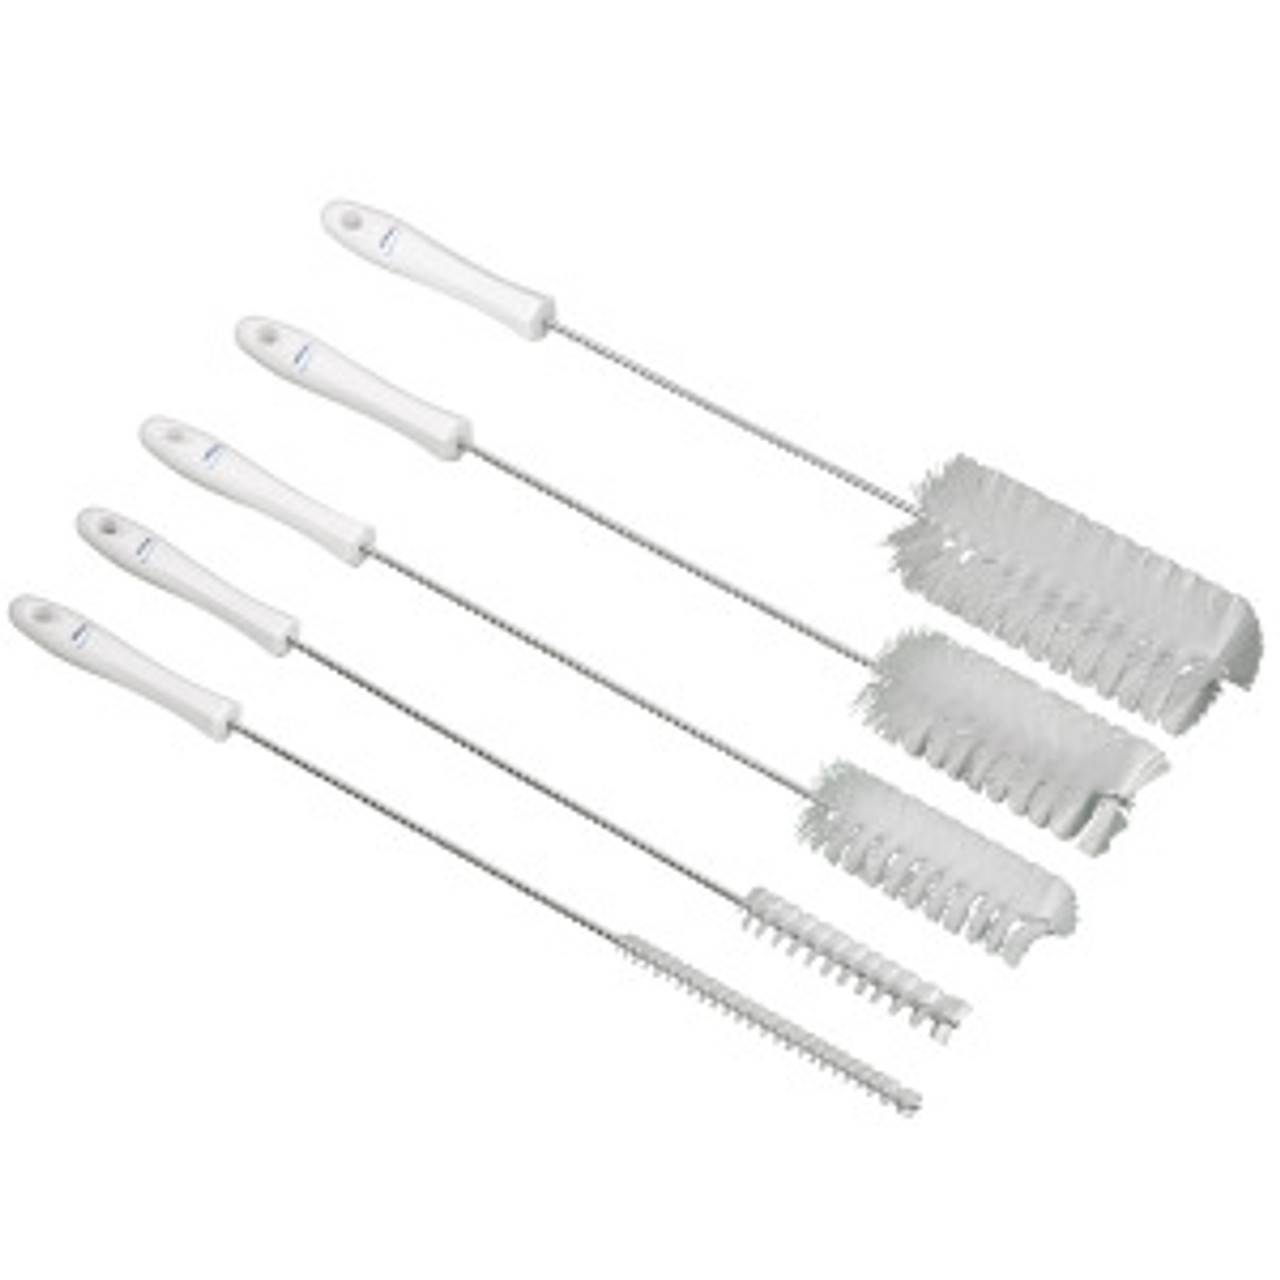  CUMFYHOUS-Set of 12 Tube Pipe Cleaners Brush Kit